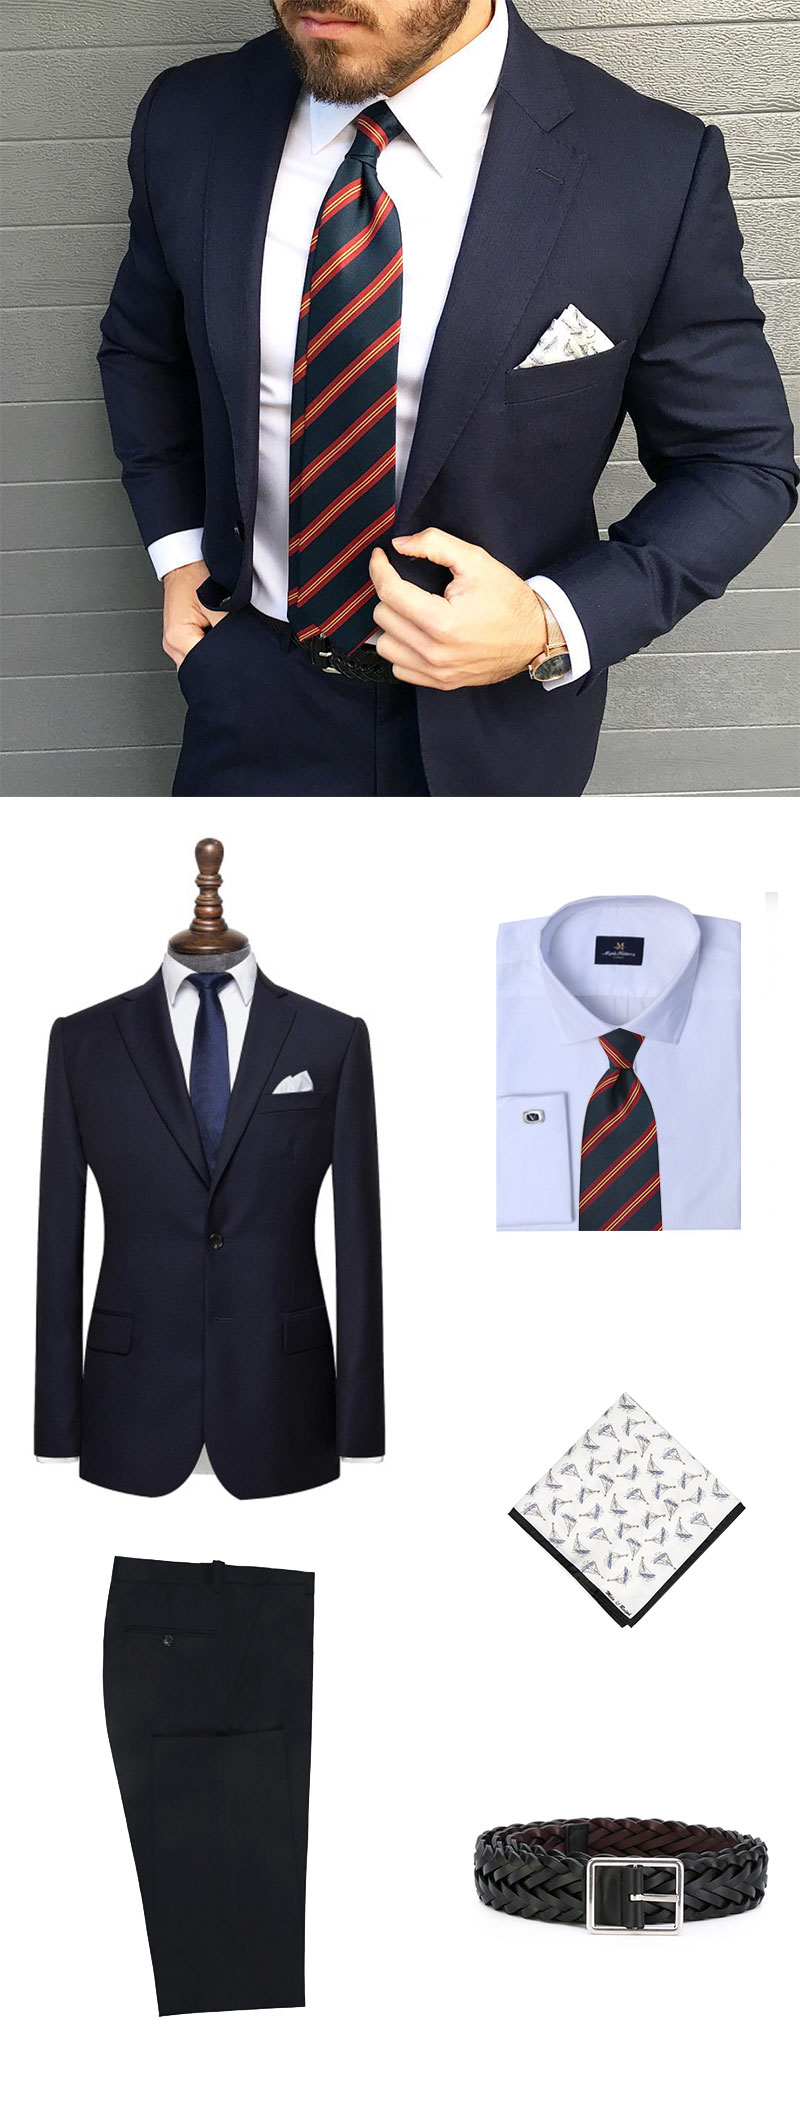 Regimental Tie and Custom Suit